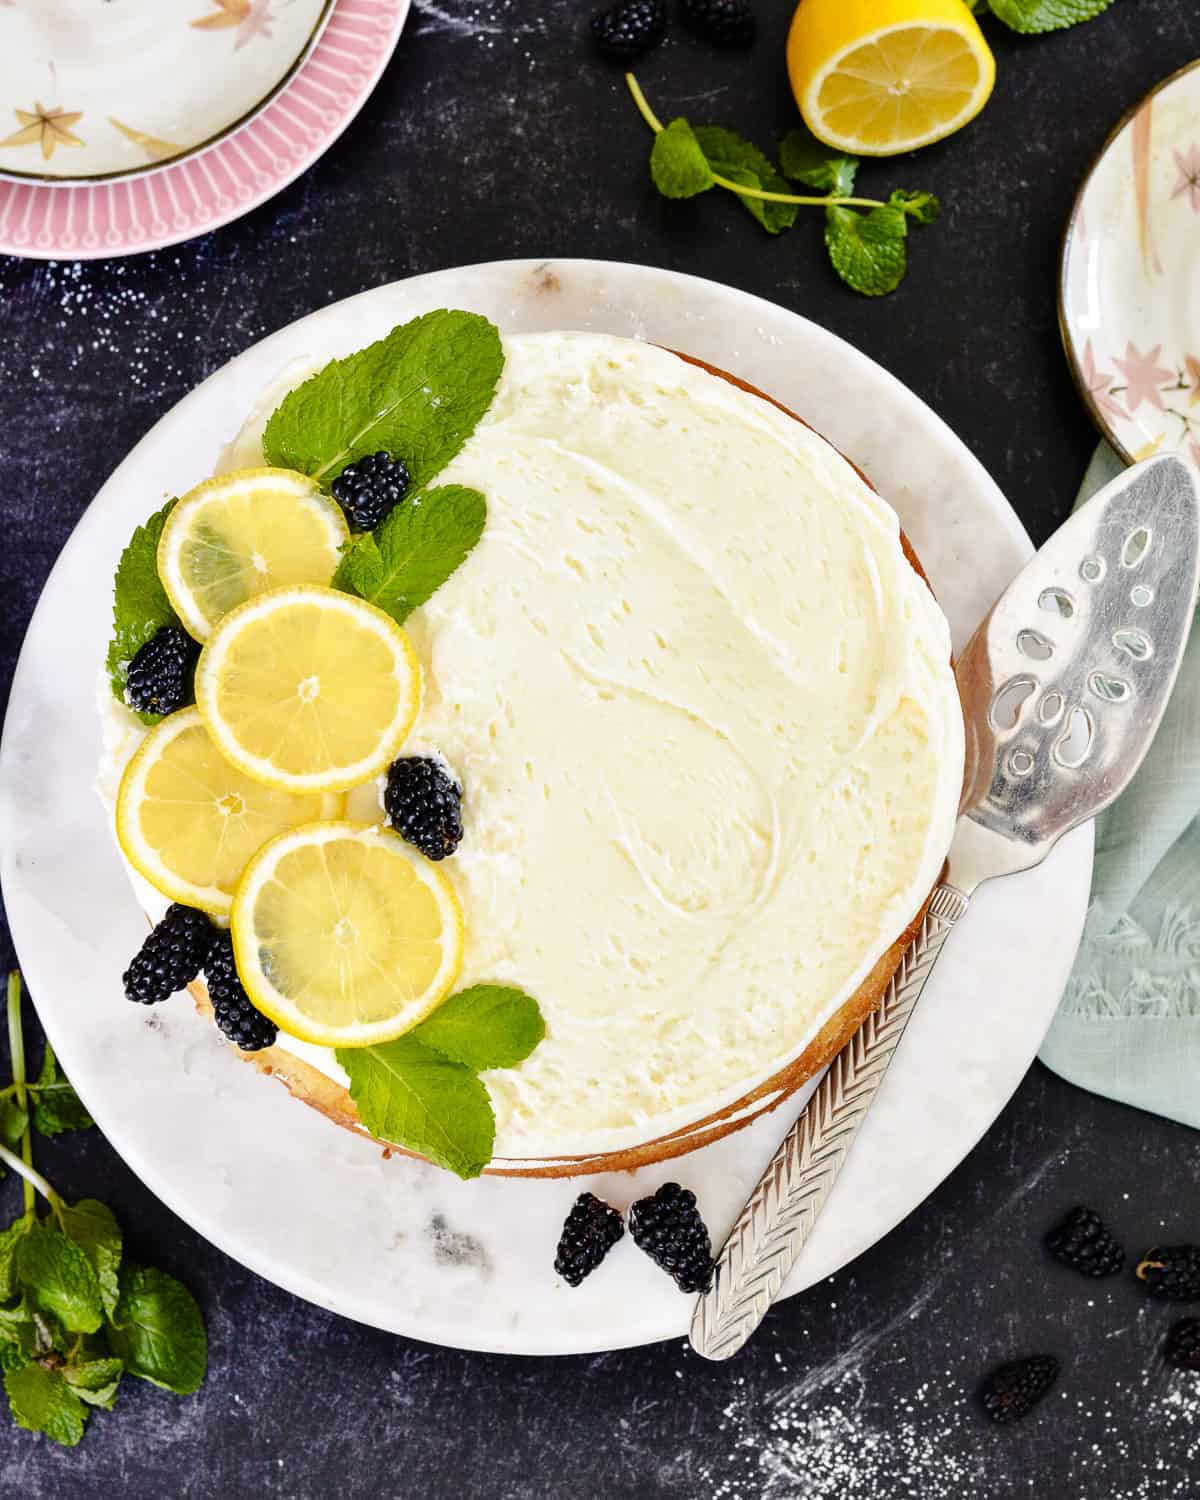 Lemons, blackberries and mint on top of frosting on a lemon cake. Cake server sitting next to cake.